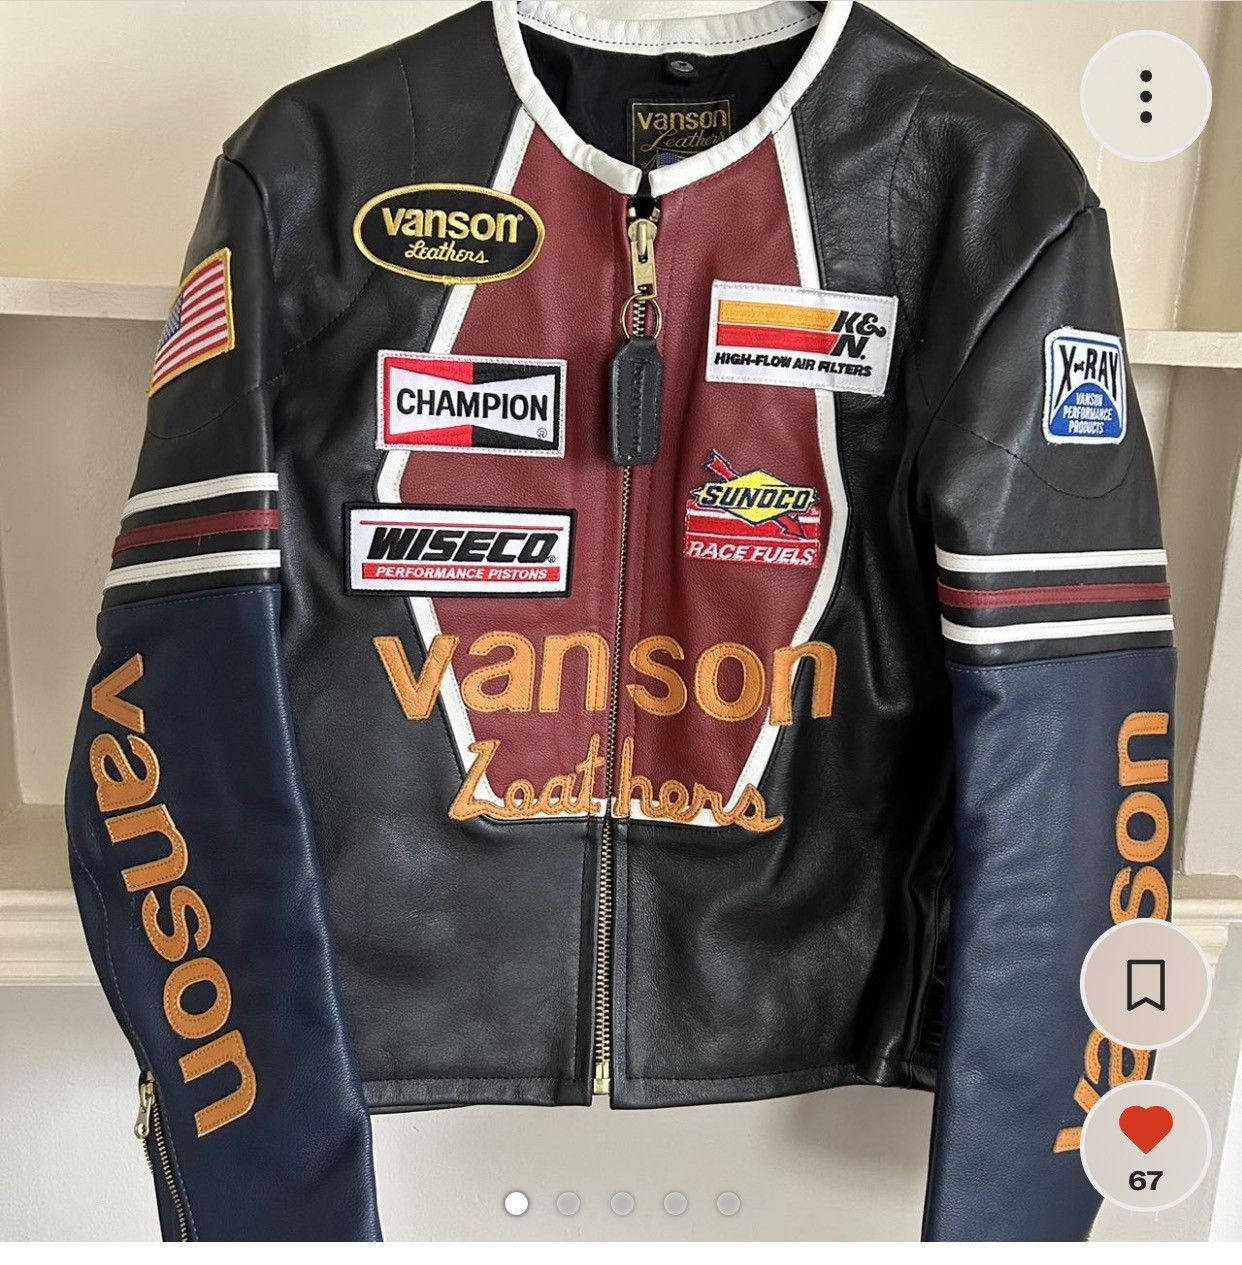 Vanson Leathers Vanson Star Leather Jacket | Grailed